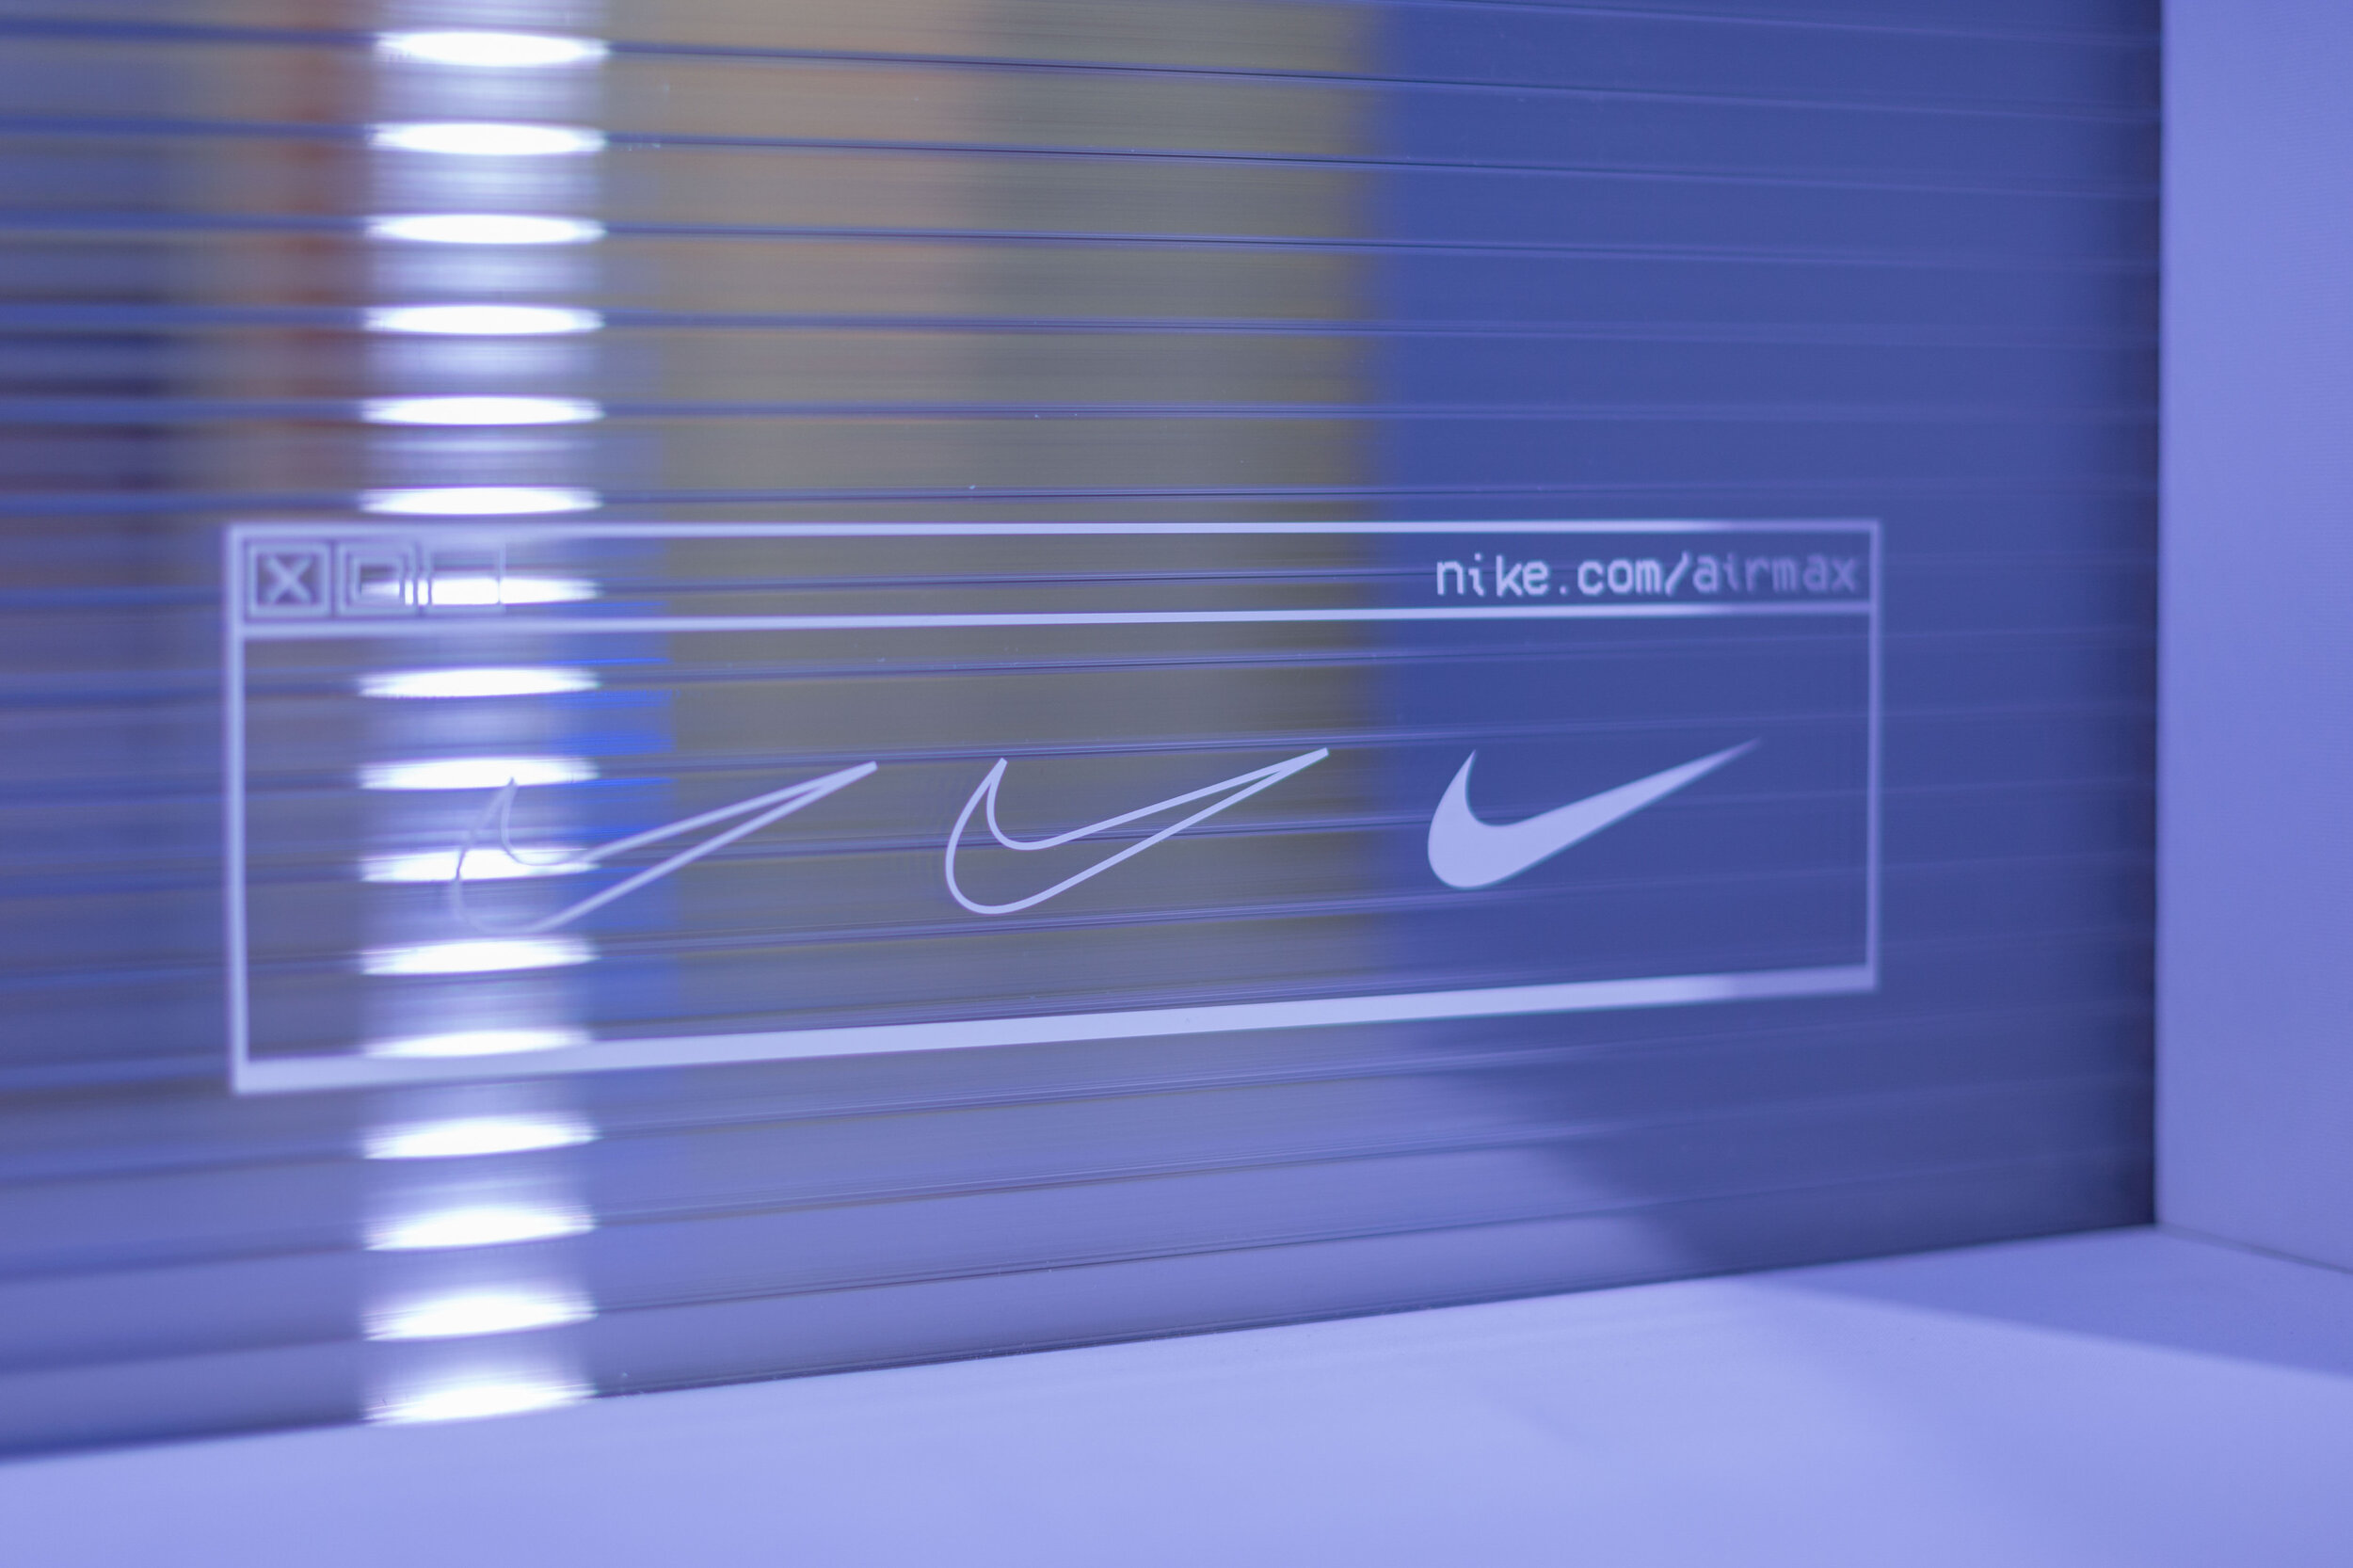 Nike-On-Air-Paris-29---ART-DIRECTION-+-DESIGN-BY-WWWESH-STUDIO-6.jpg